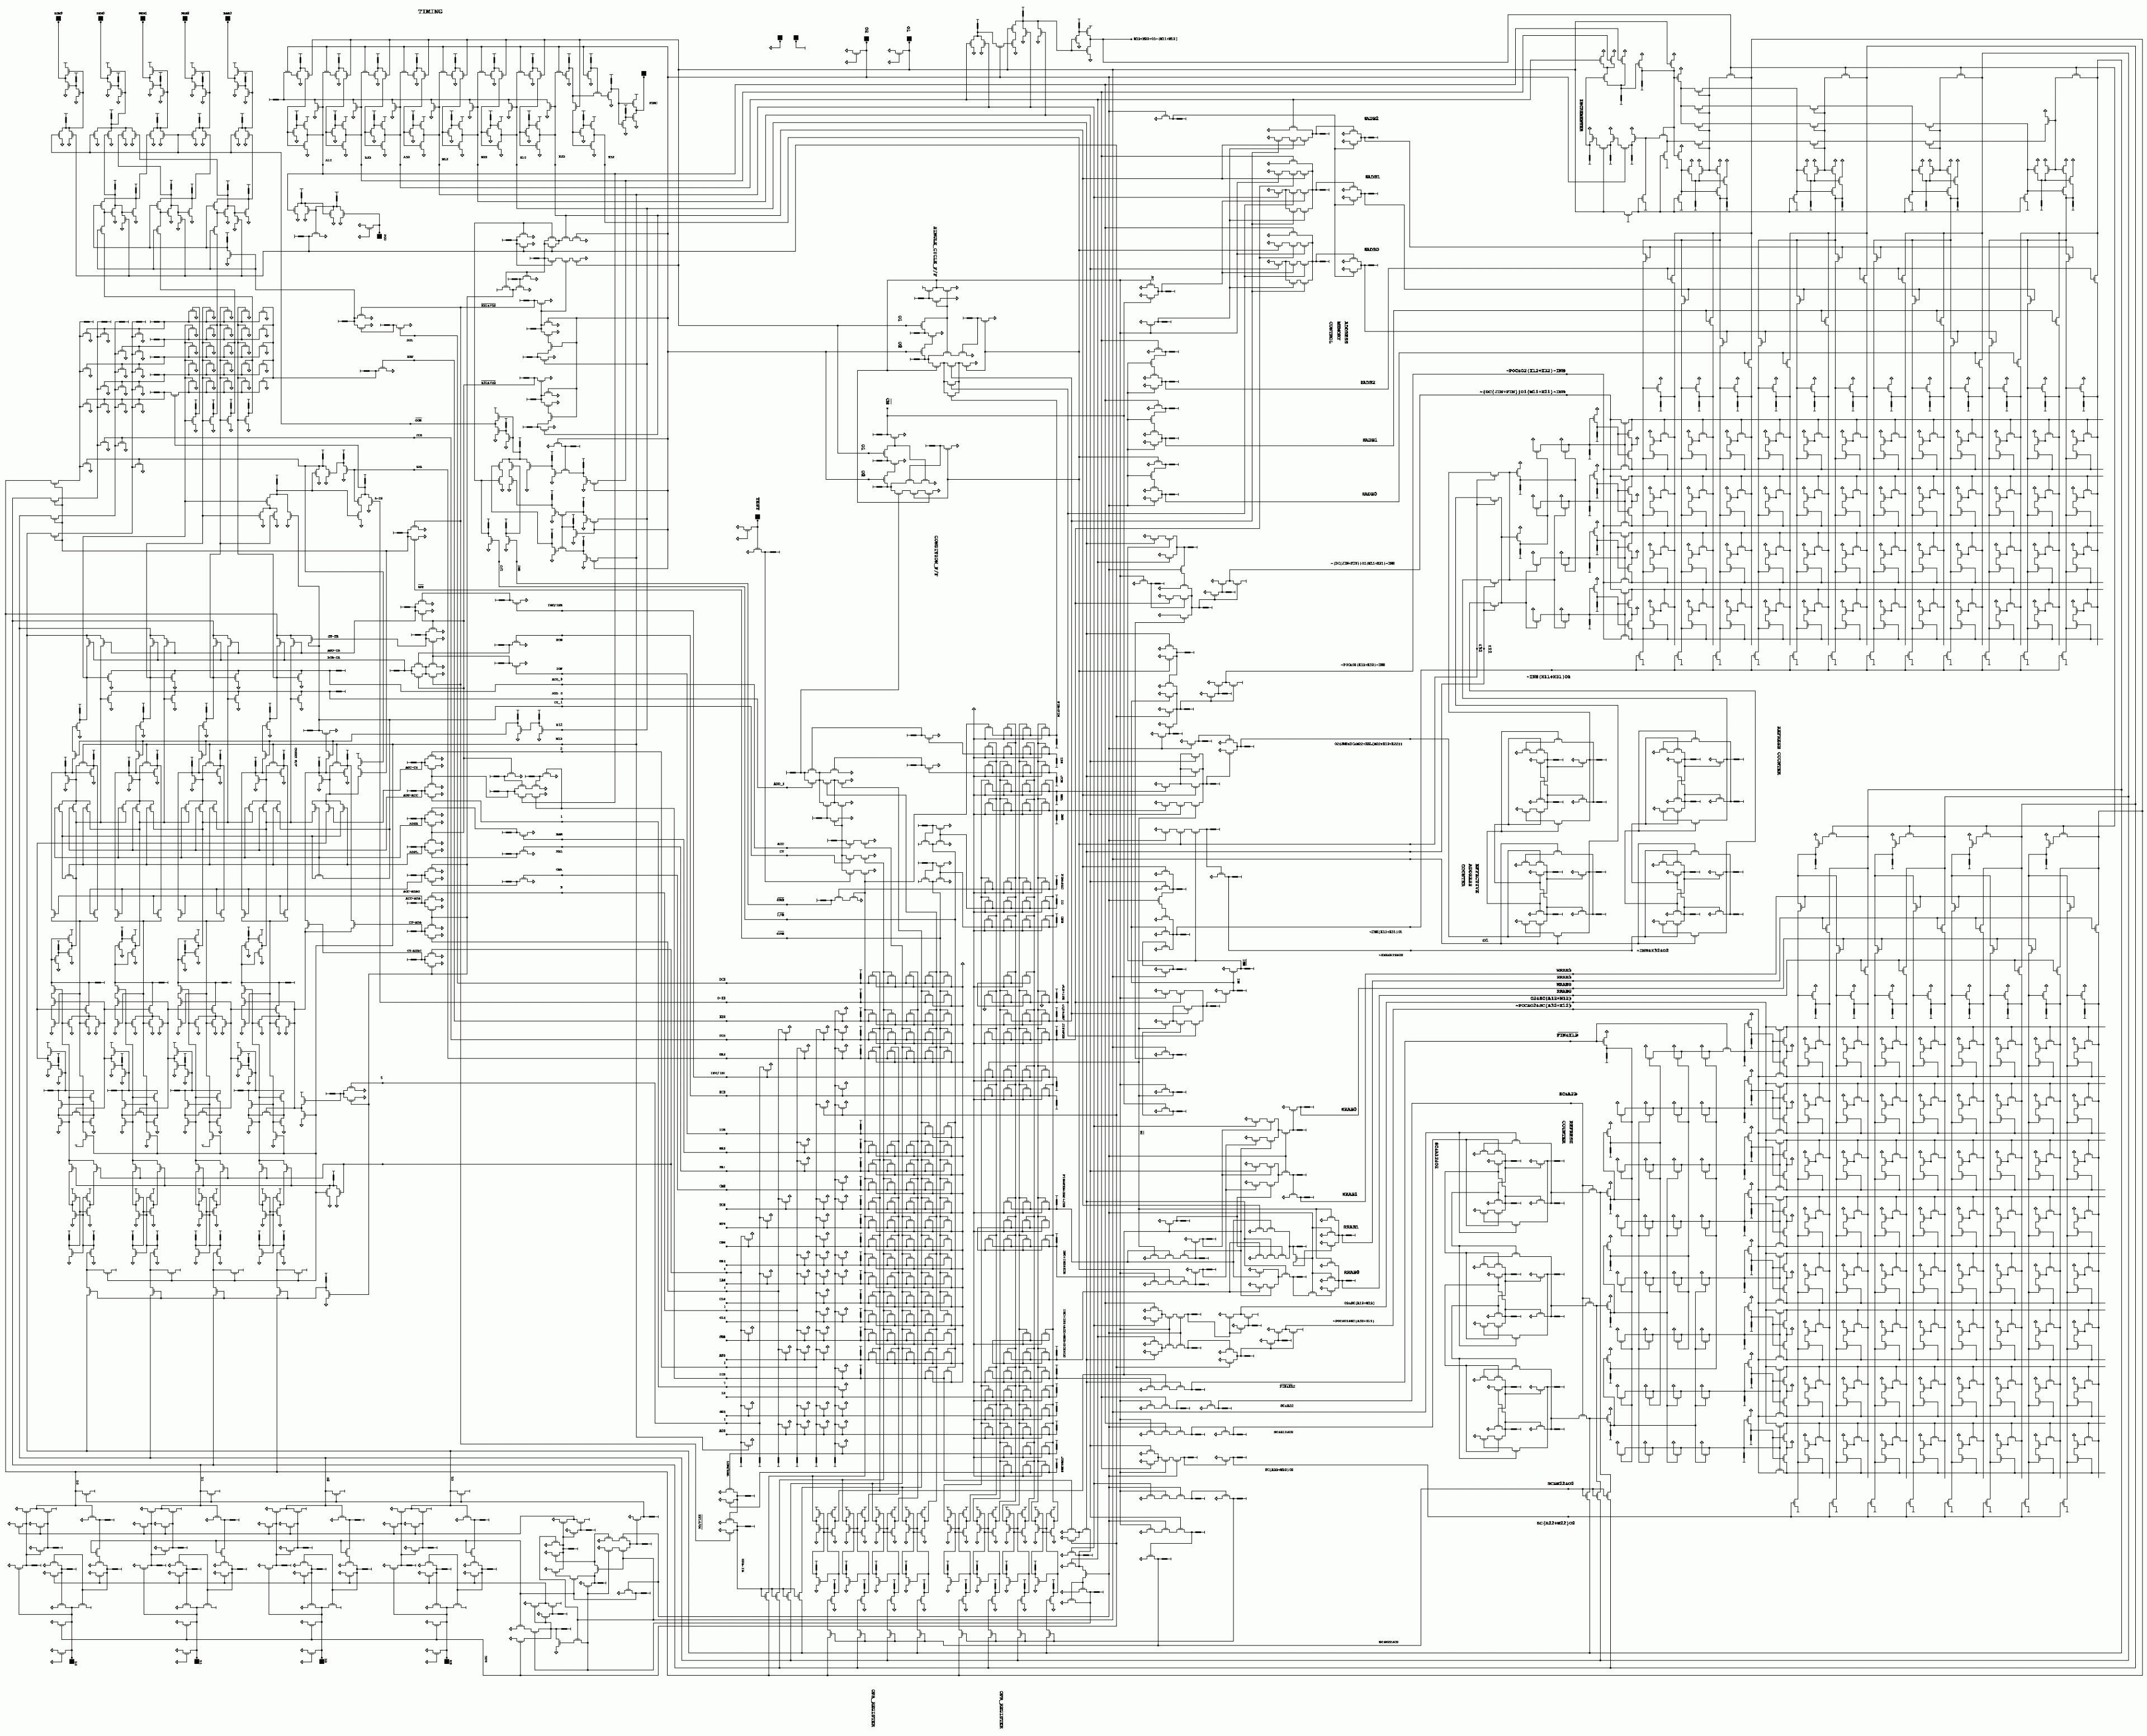 Intel 4004-schematic.gif